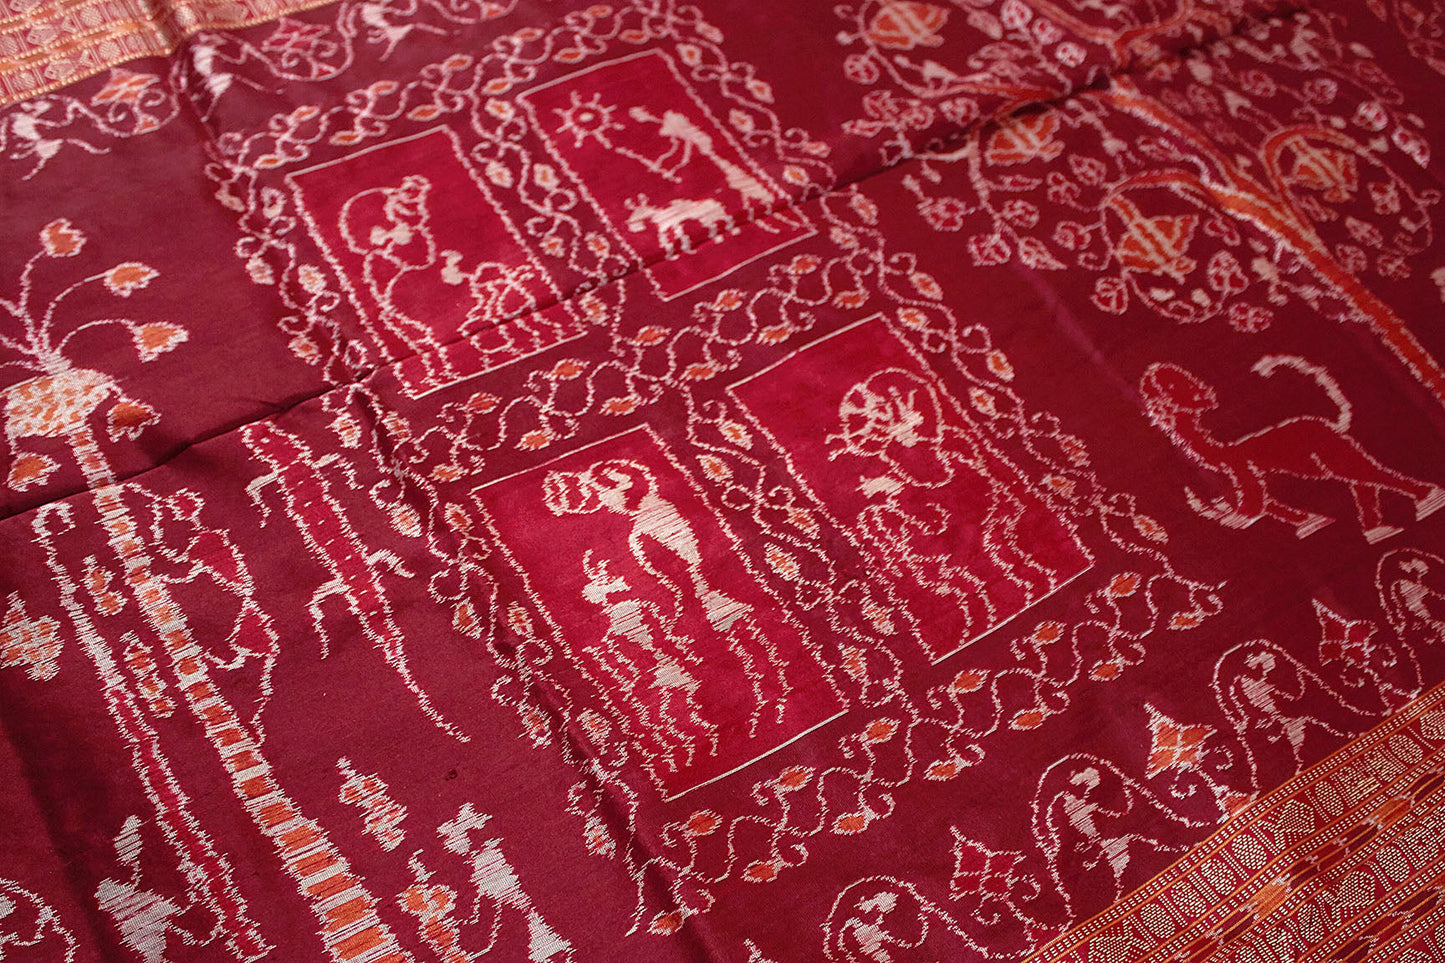 Saura Tribal Folk Art Sambalpuri Ikat Sari